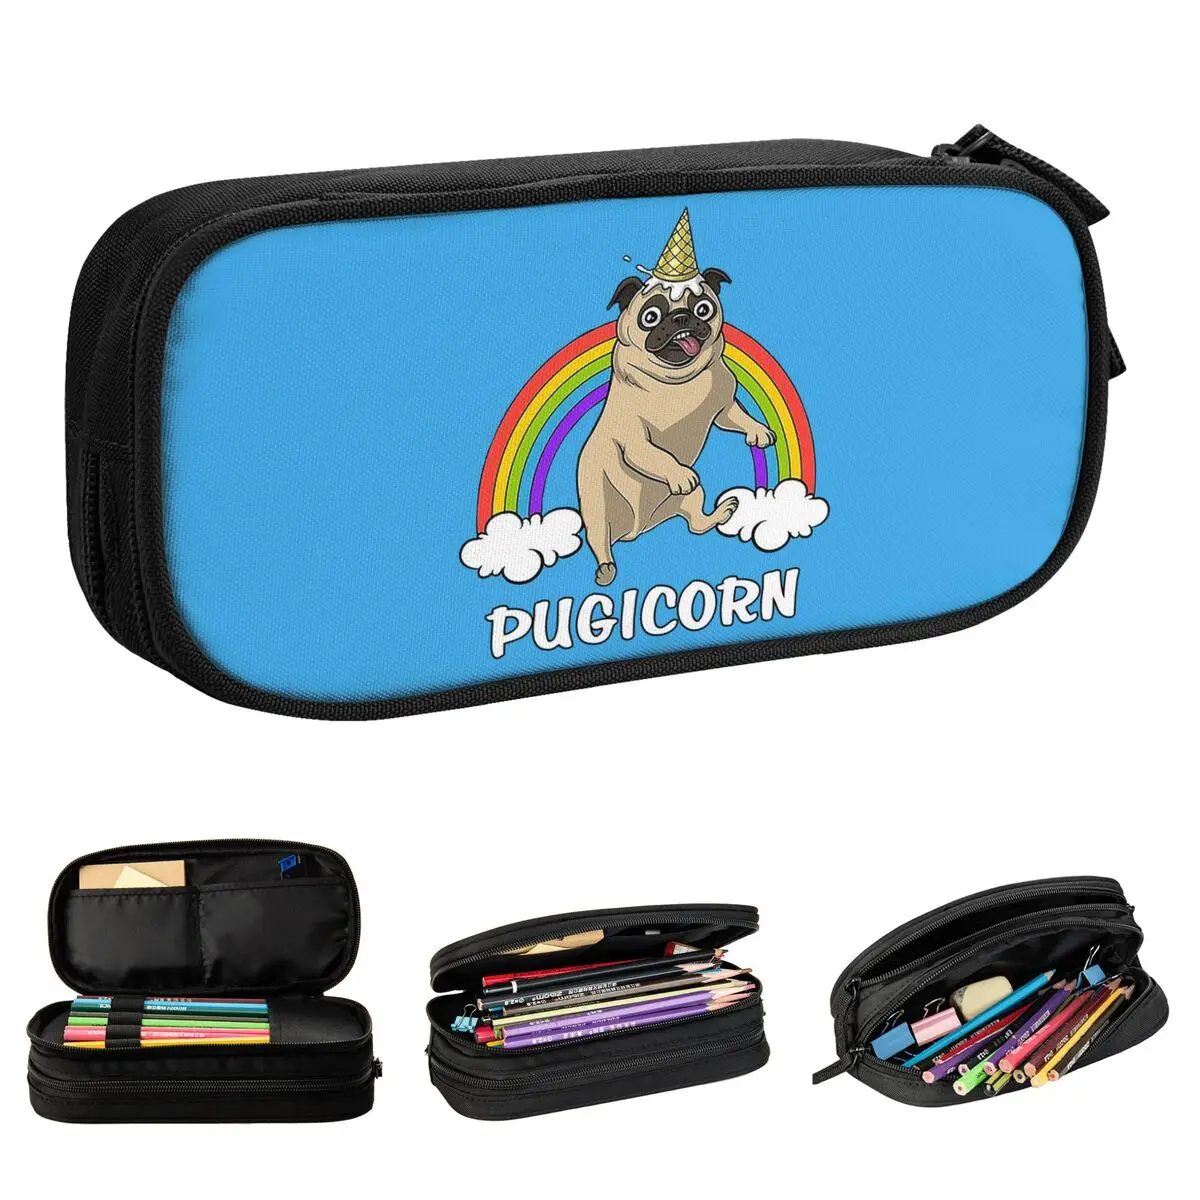 

Pugicorn Pug Unicorn Pencil Cases Bulldog Dog Pet Lover Animals Pencilcases Pen Holder Bag School Supplies Gift Stationery